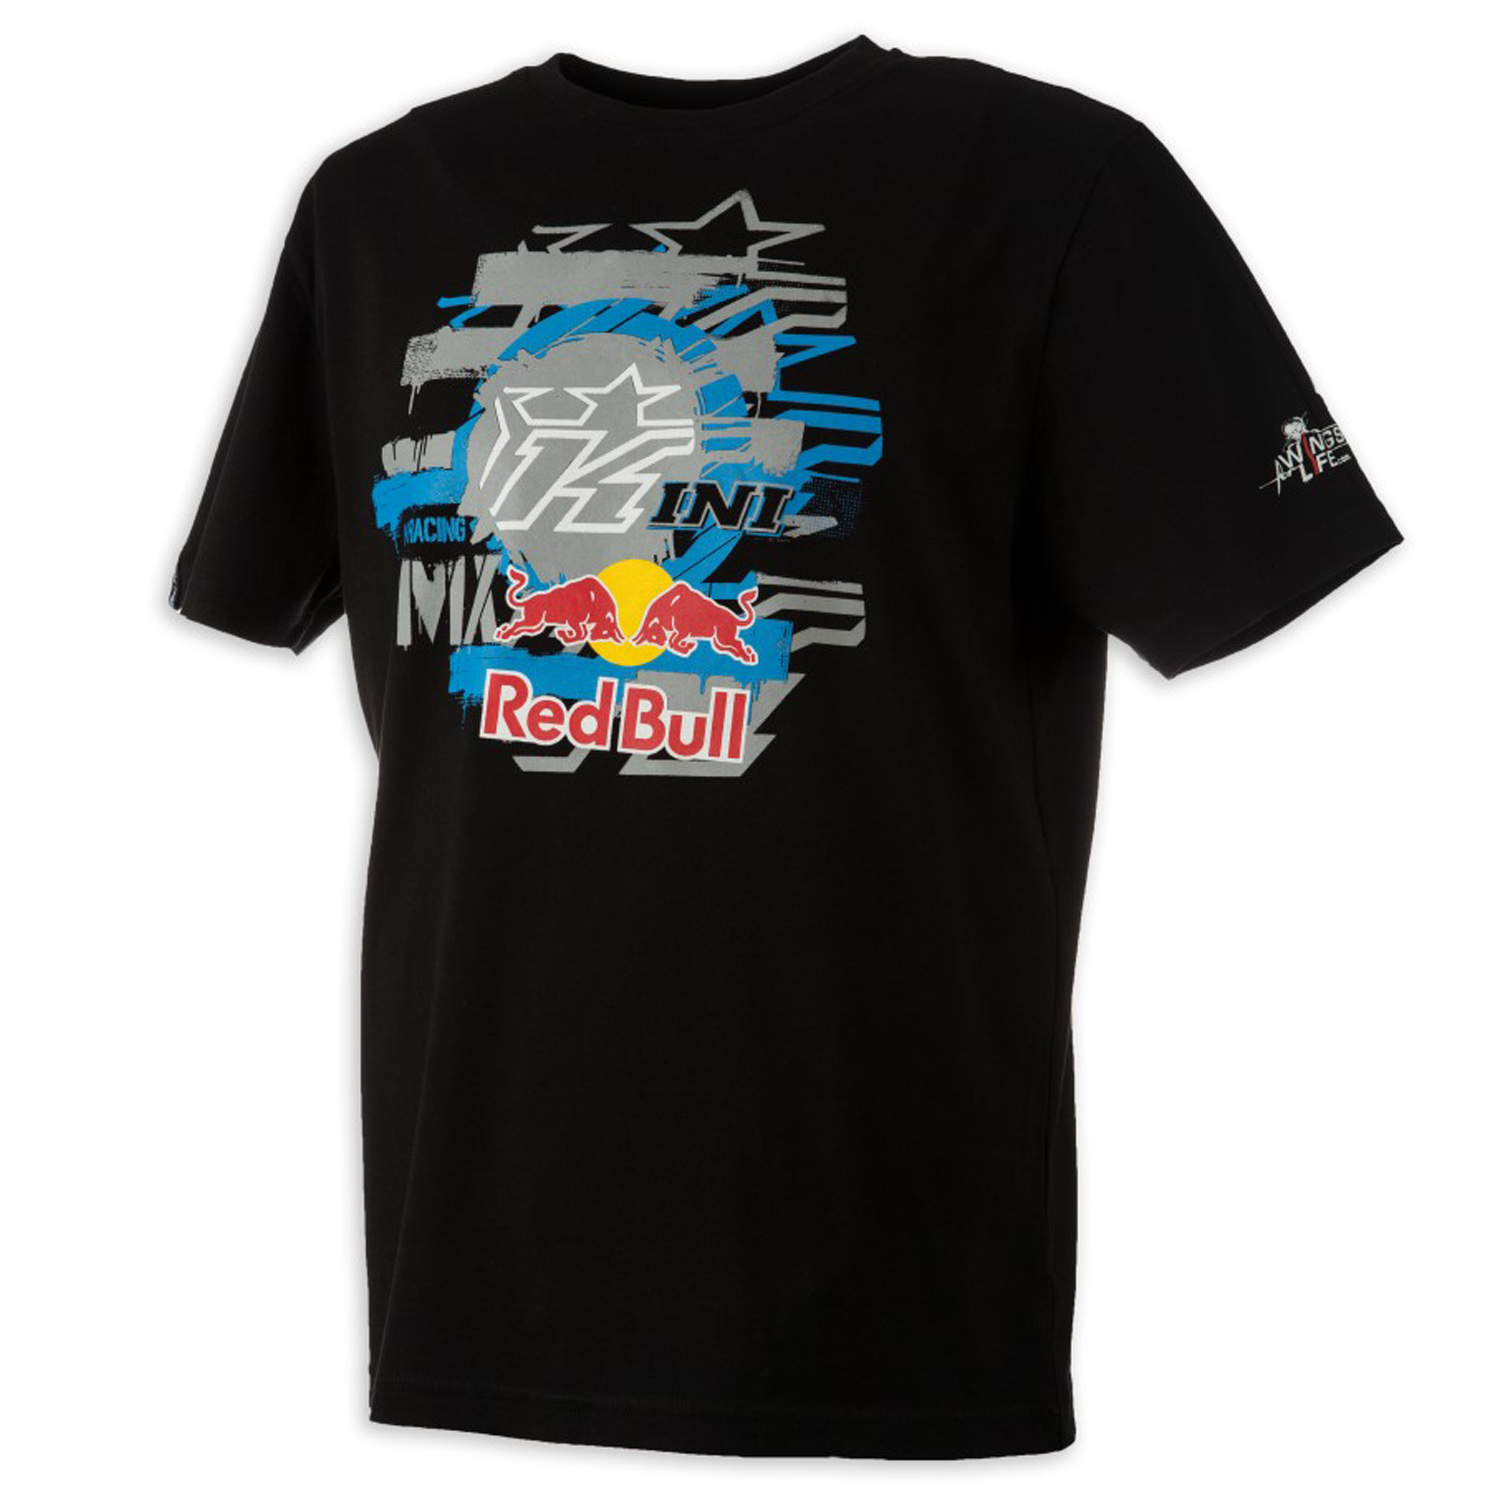 Kini Red Bull T-Shirt Layered Black